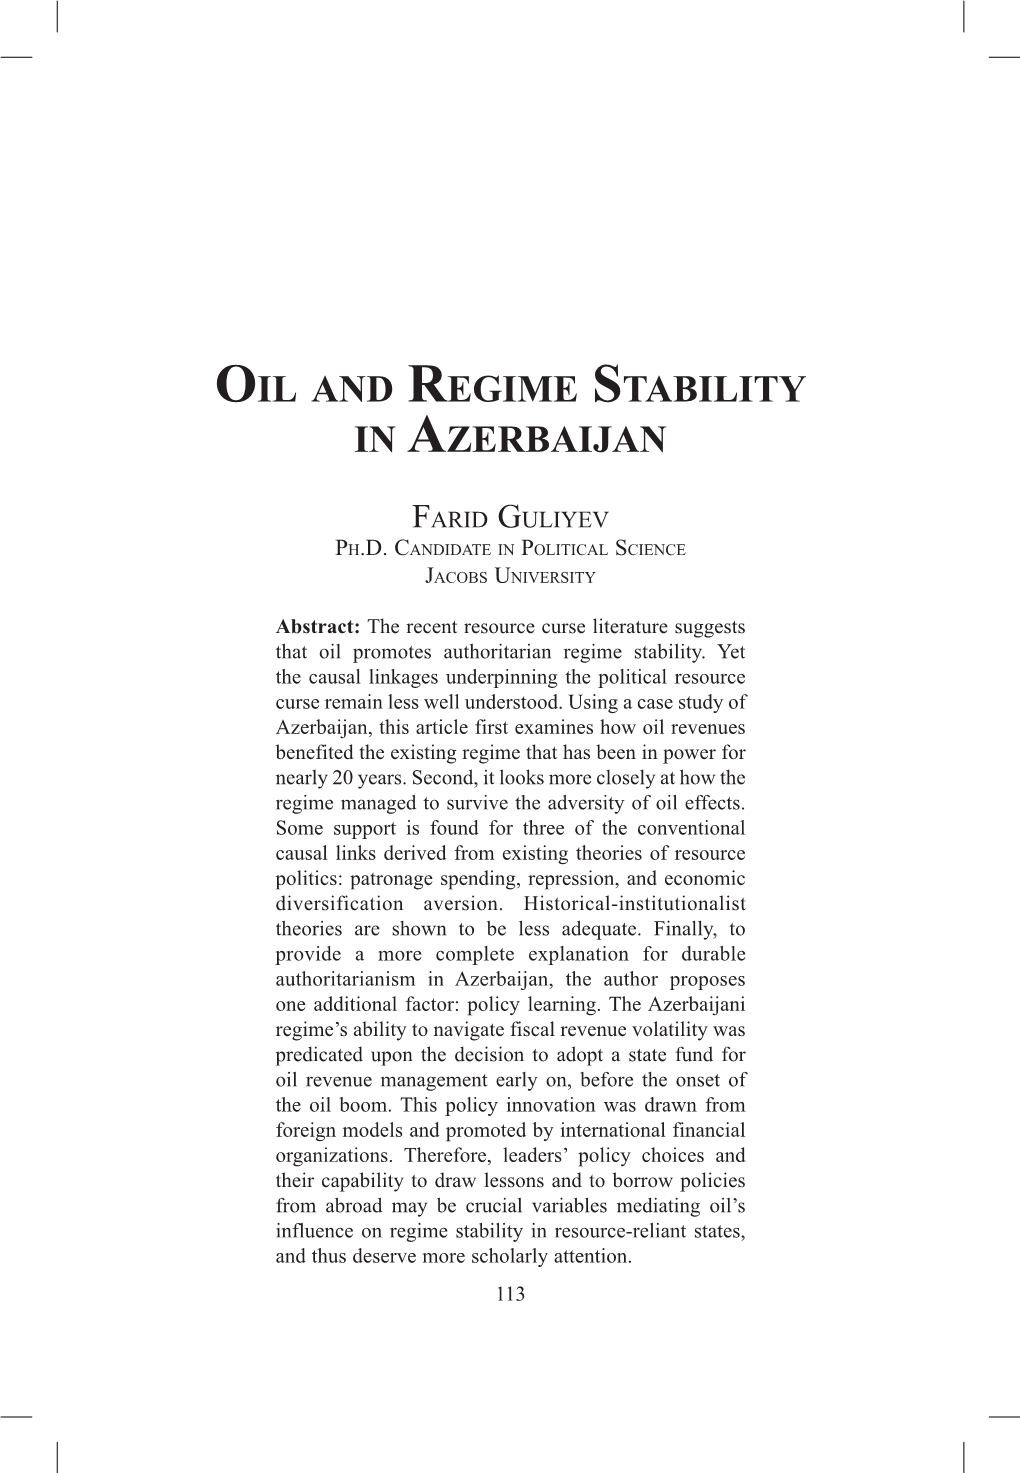 Oil and Regime Stability in Azerbaijan